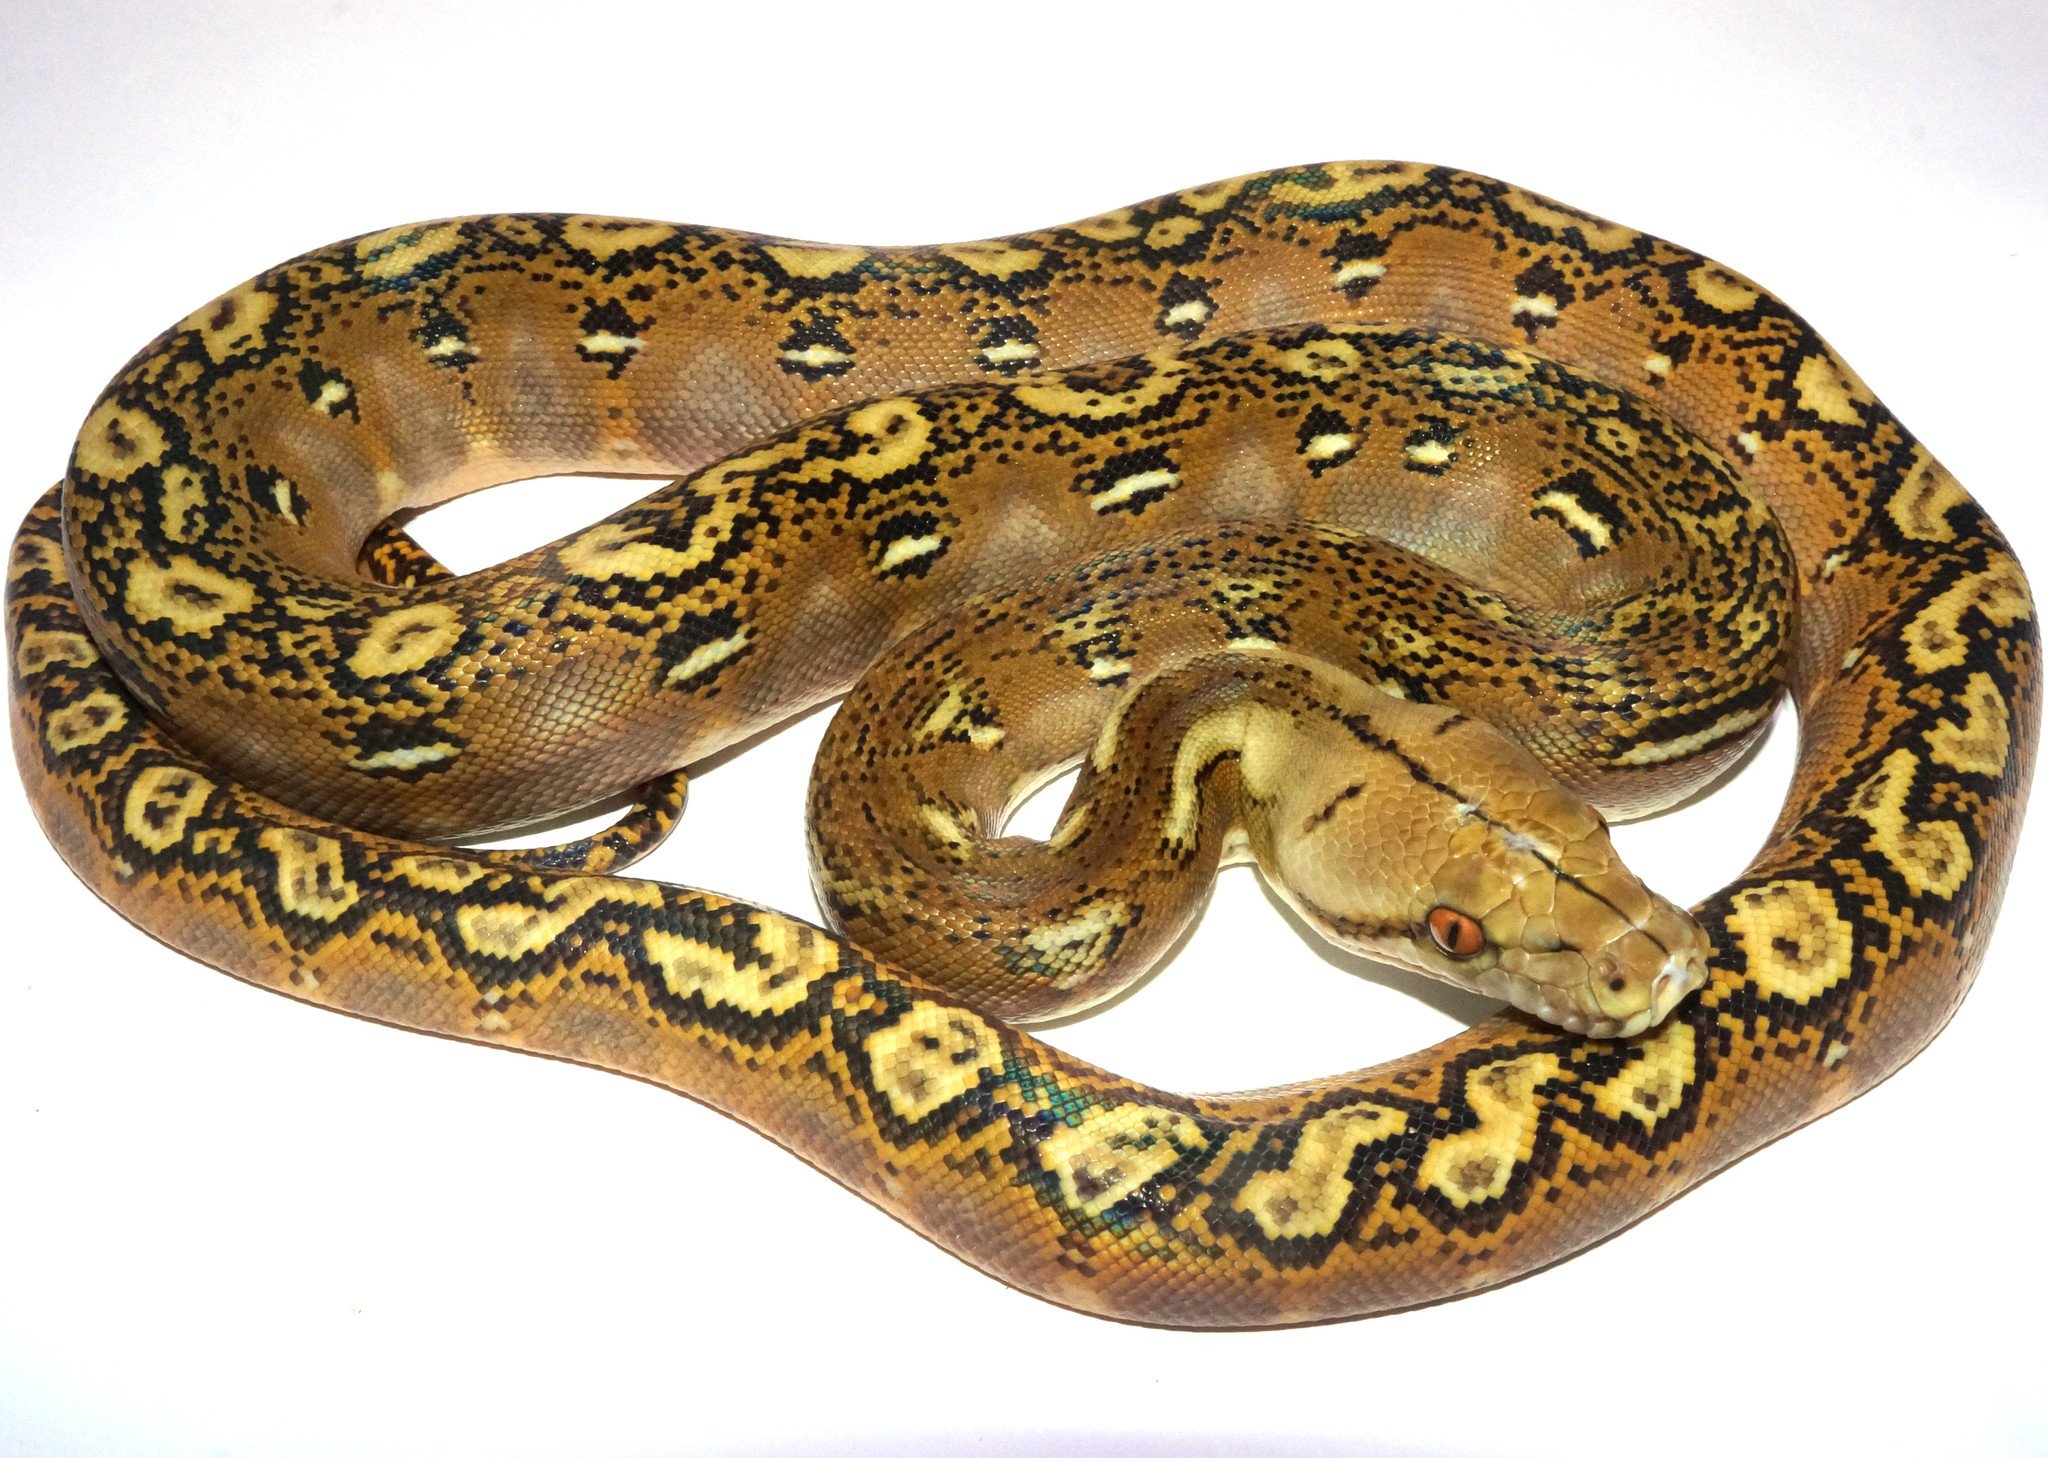 Phantom Reticulated Python by New England Reptile Distributors